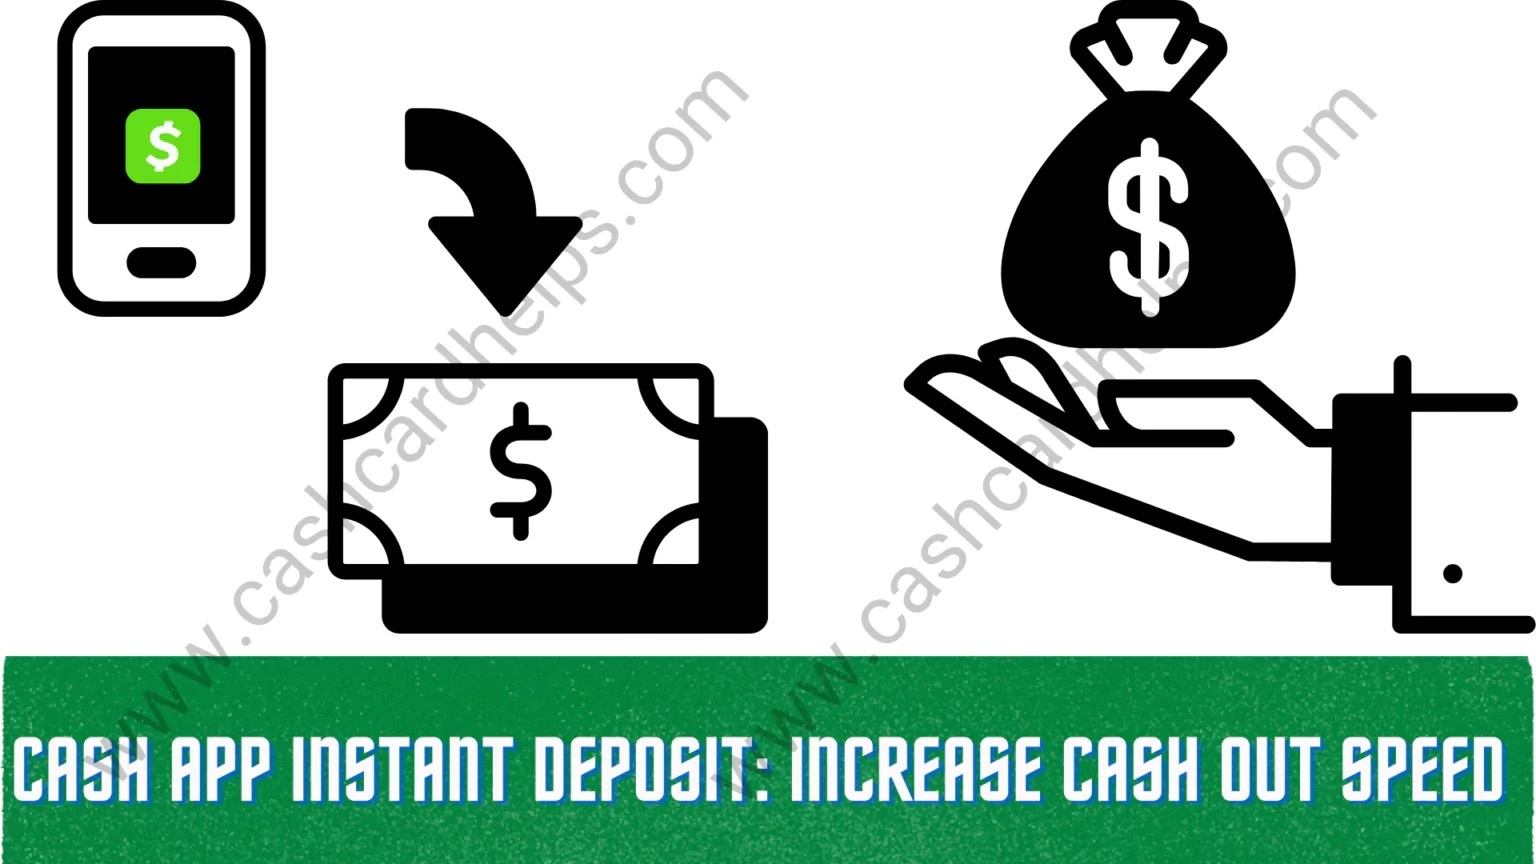 cash-app-instant-deposit1.jpg